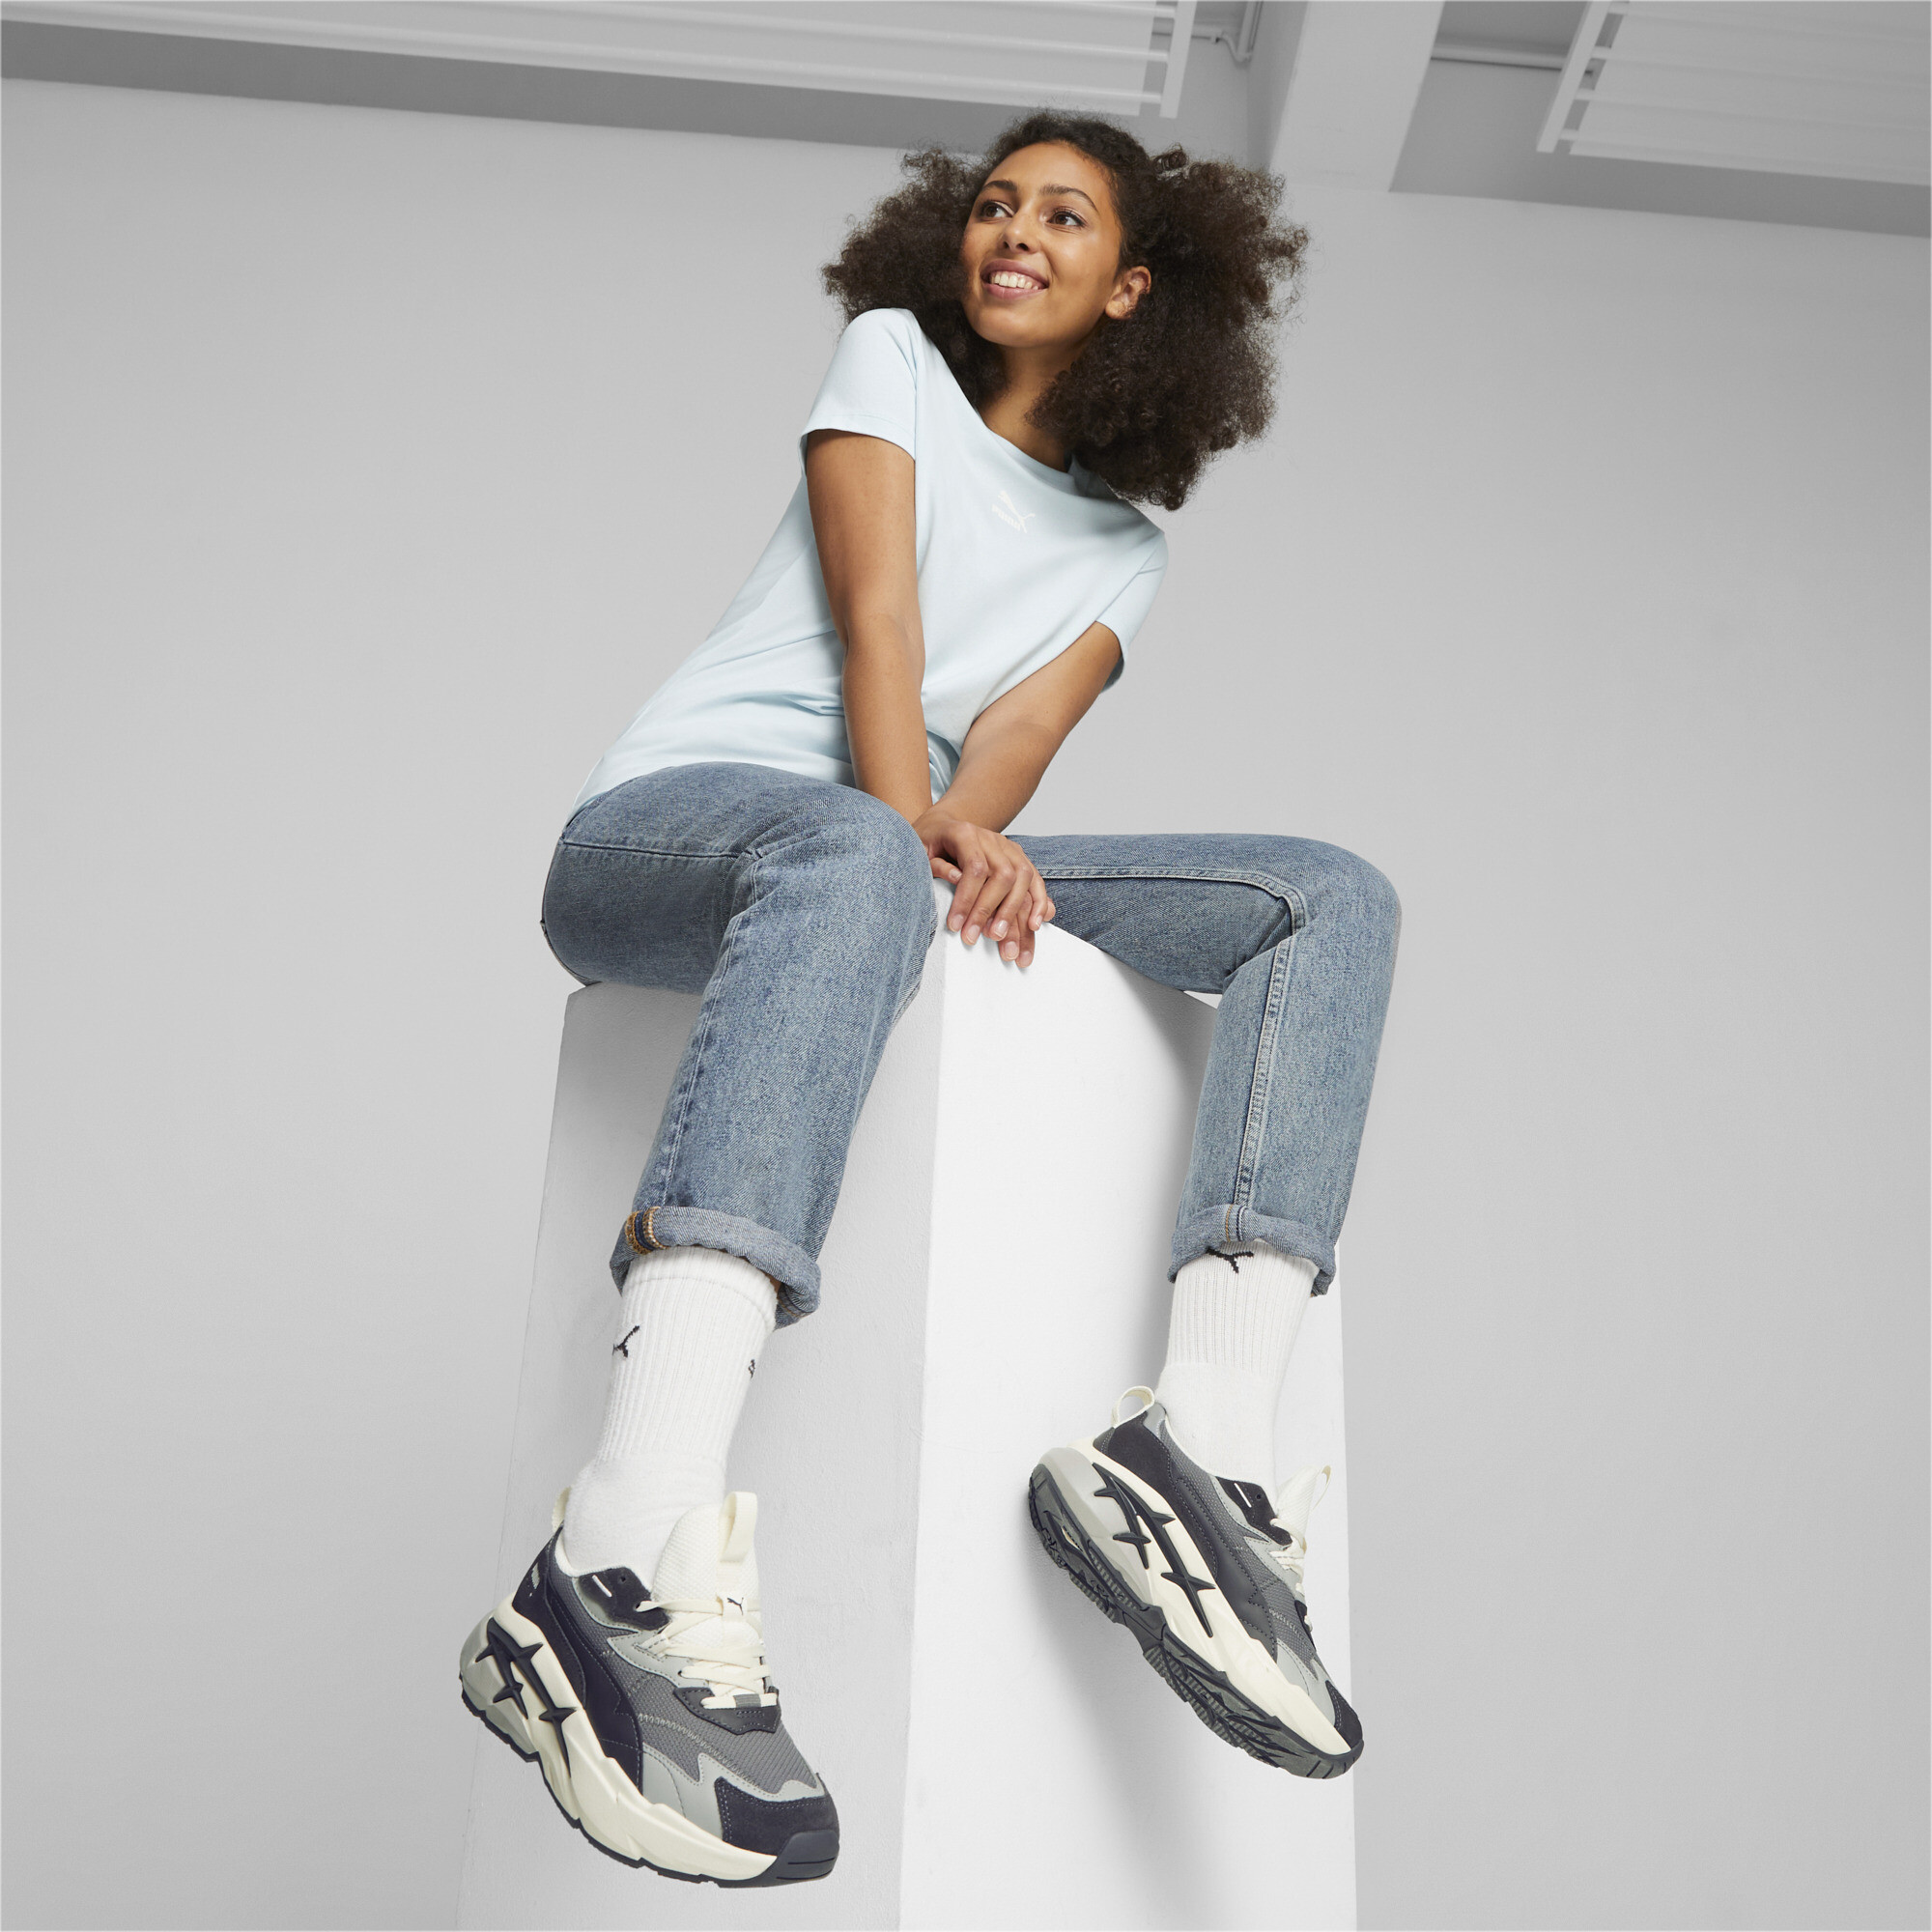 Women's PUMA Spina NITRO Tonal Sneakers In Gray, Size EU 35.5